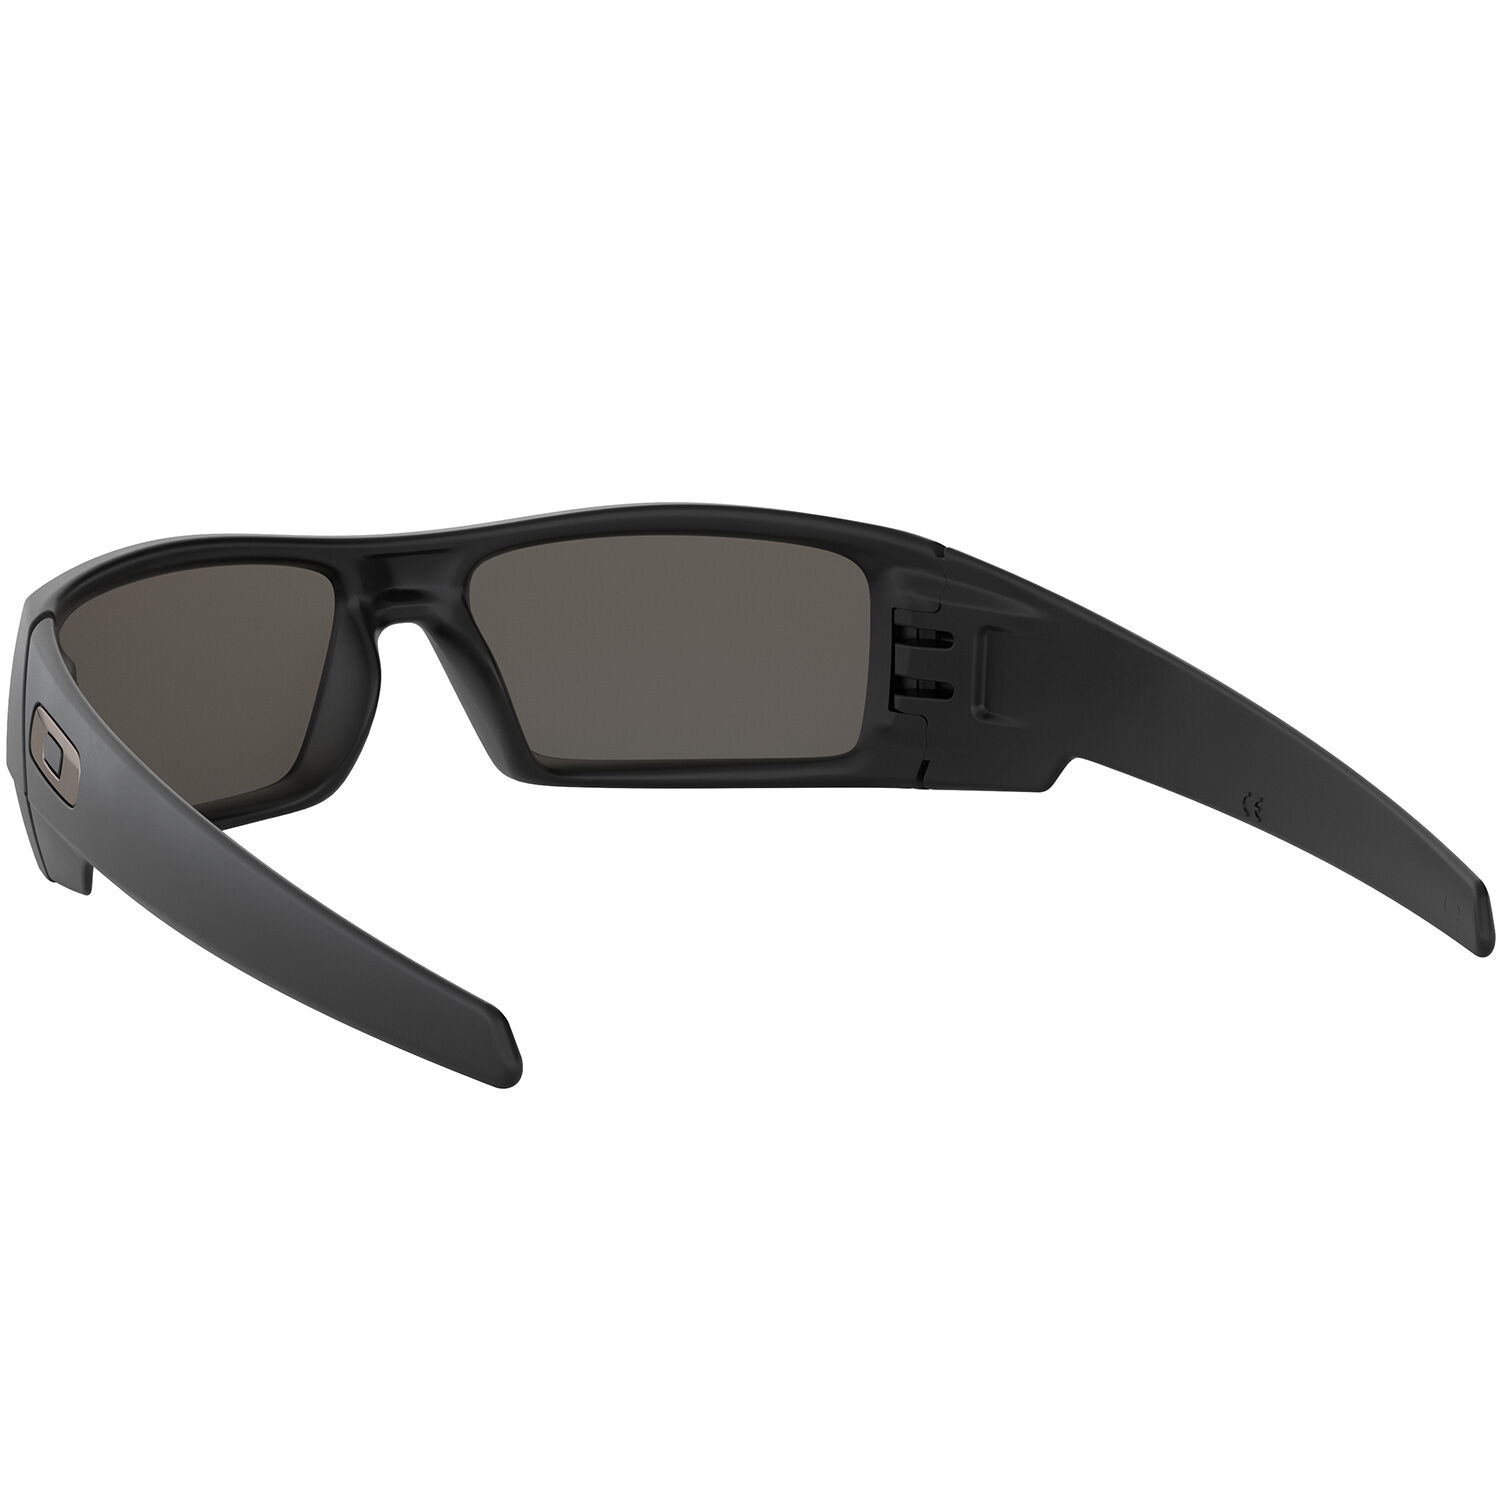 Unboxing and review sunglasses Oakley Gascan Matte Black Iridium Polarized  (+correction) - YouTube